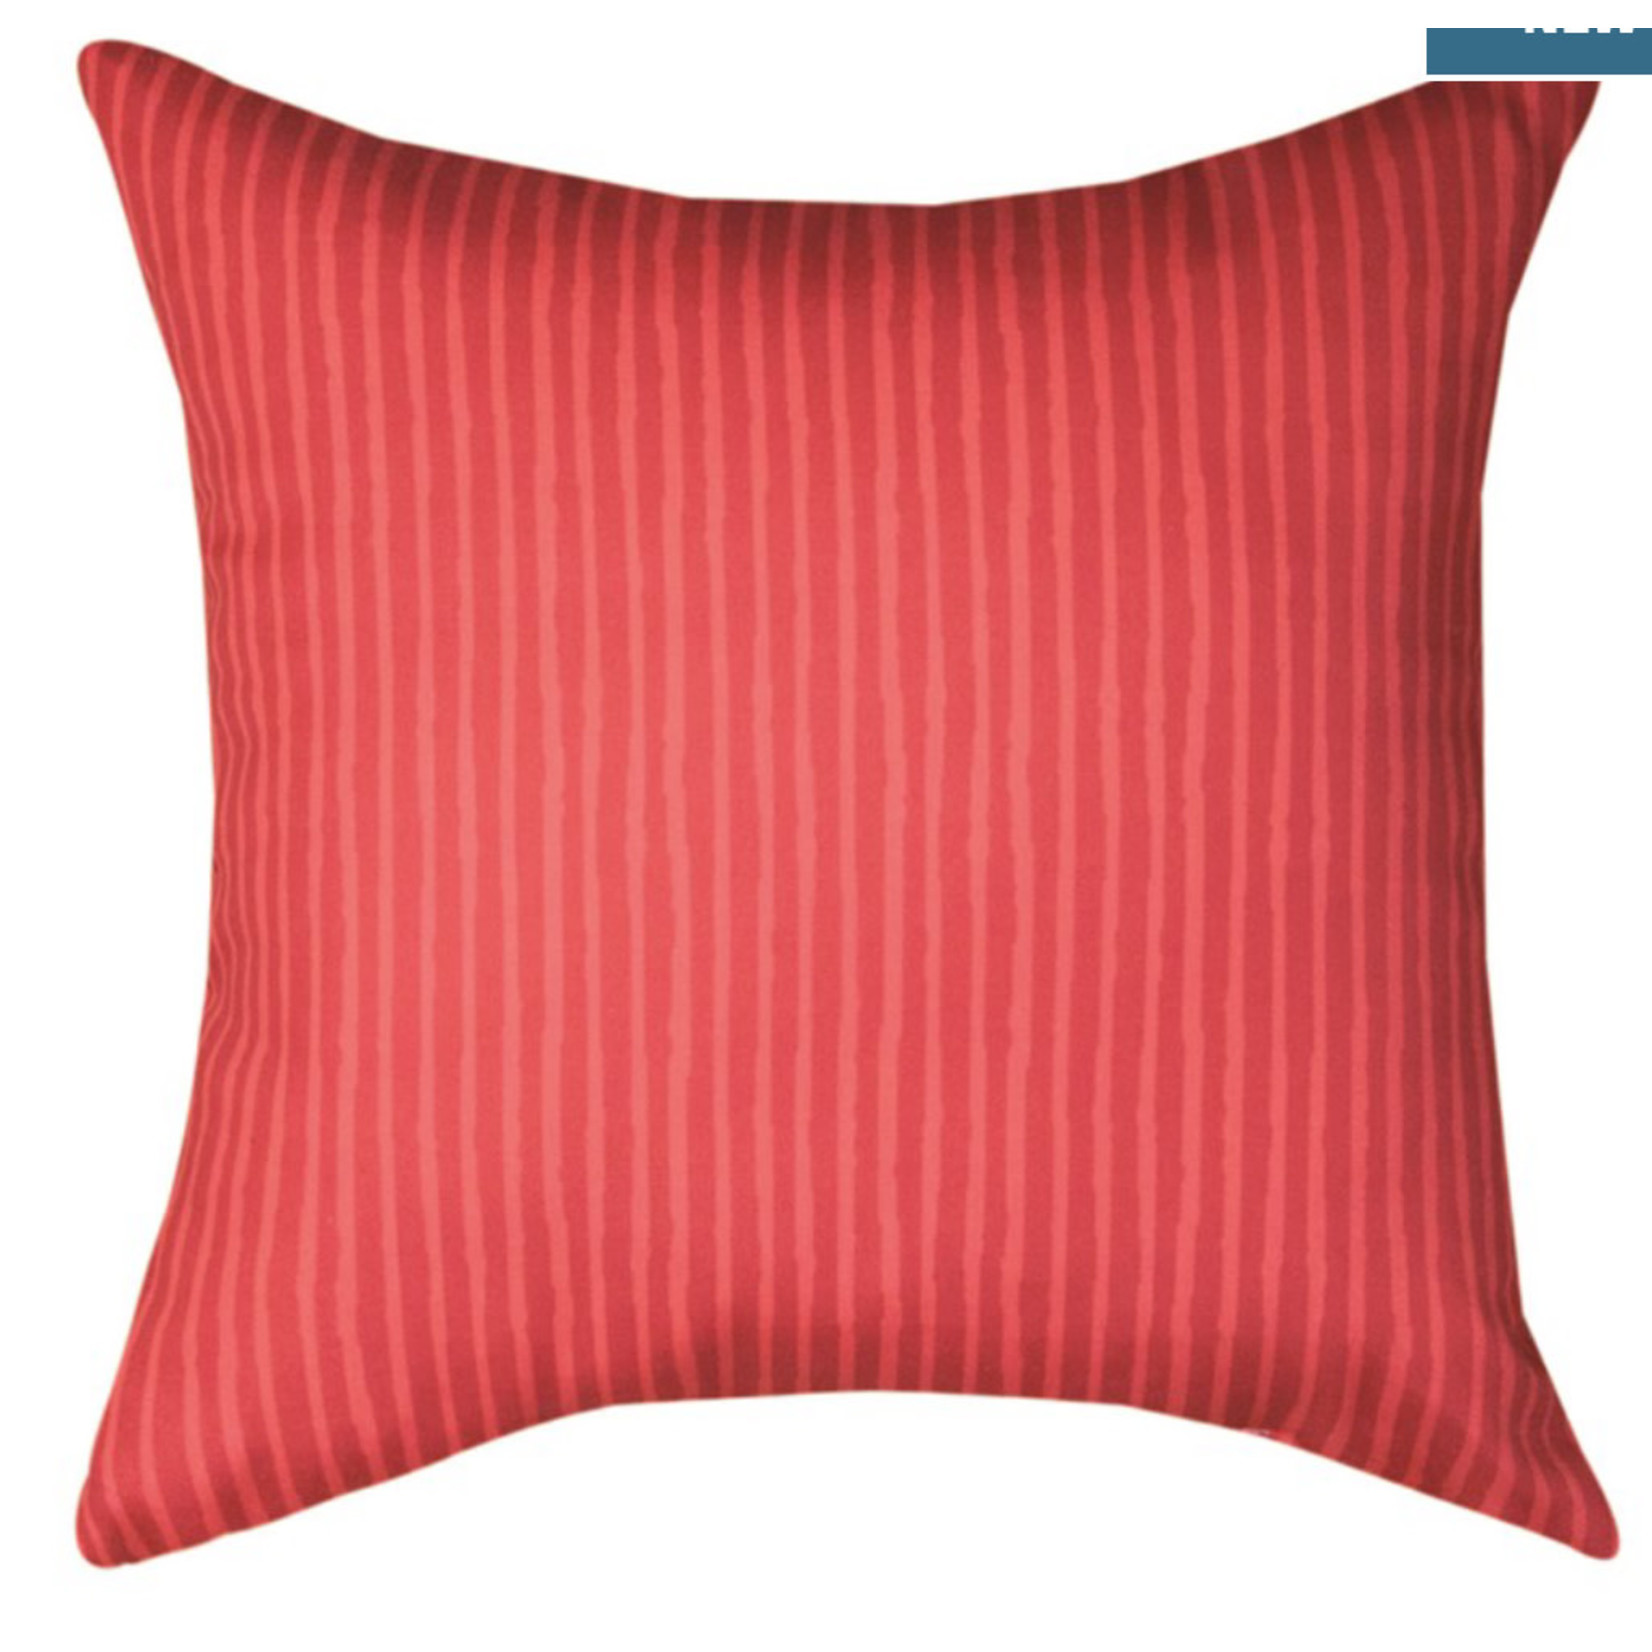 MWW Color Splash Red Pillow 18x18